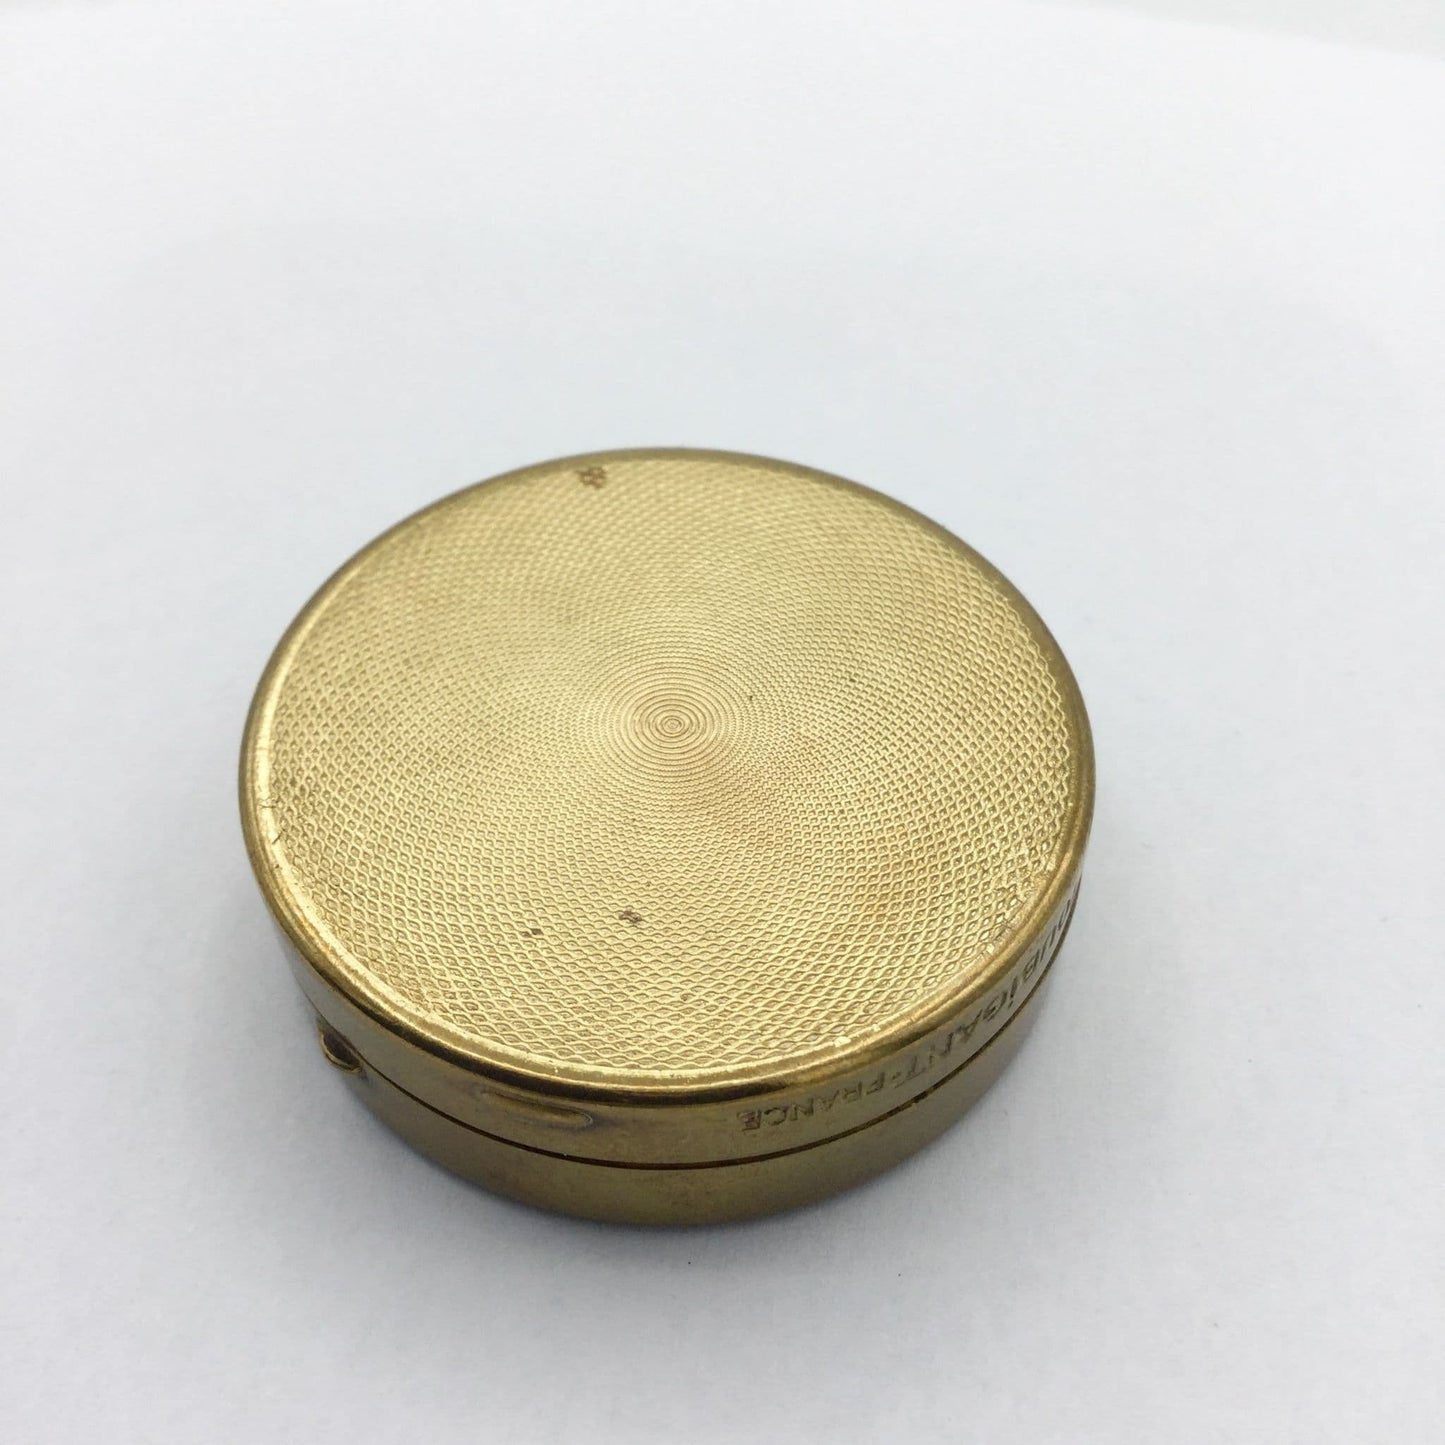 base of Houbigant brass compact showing a beautiful pattern